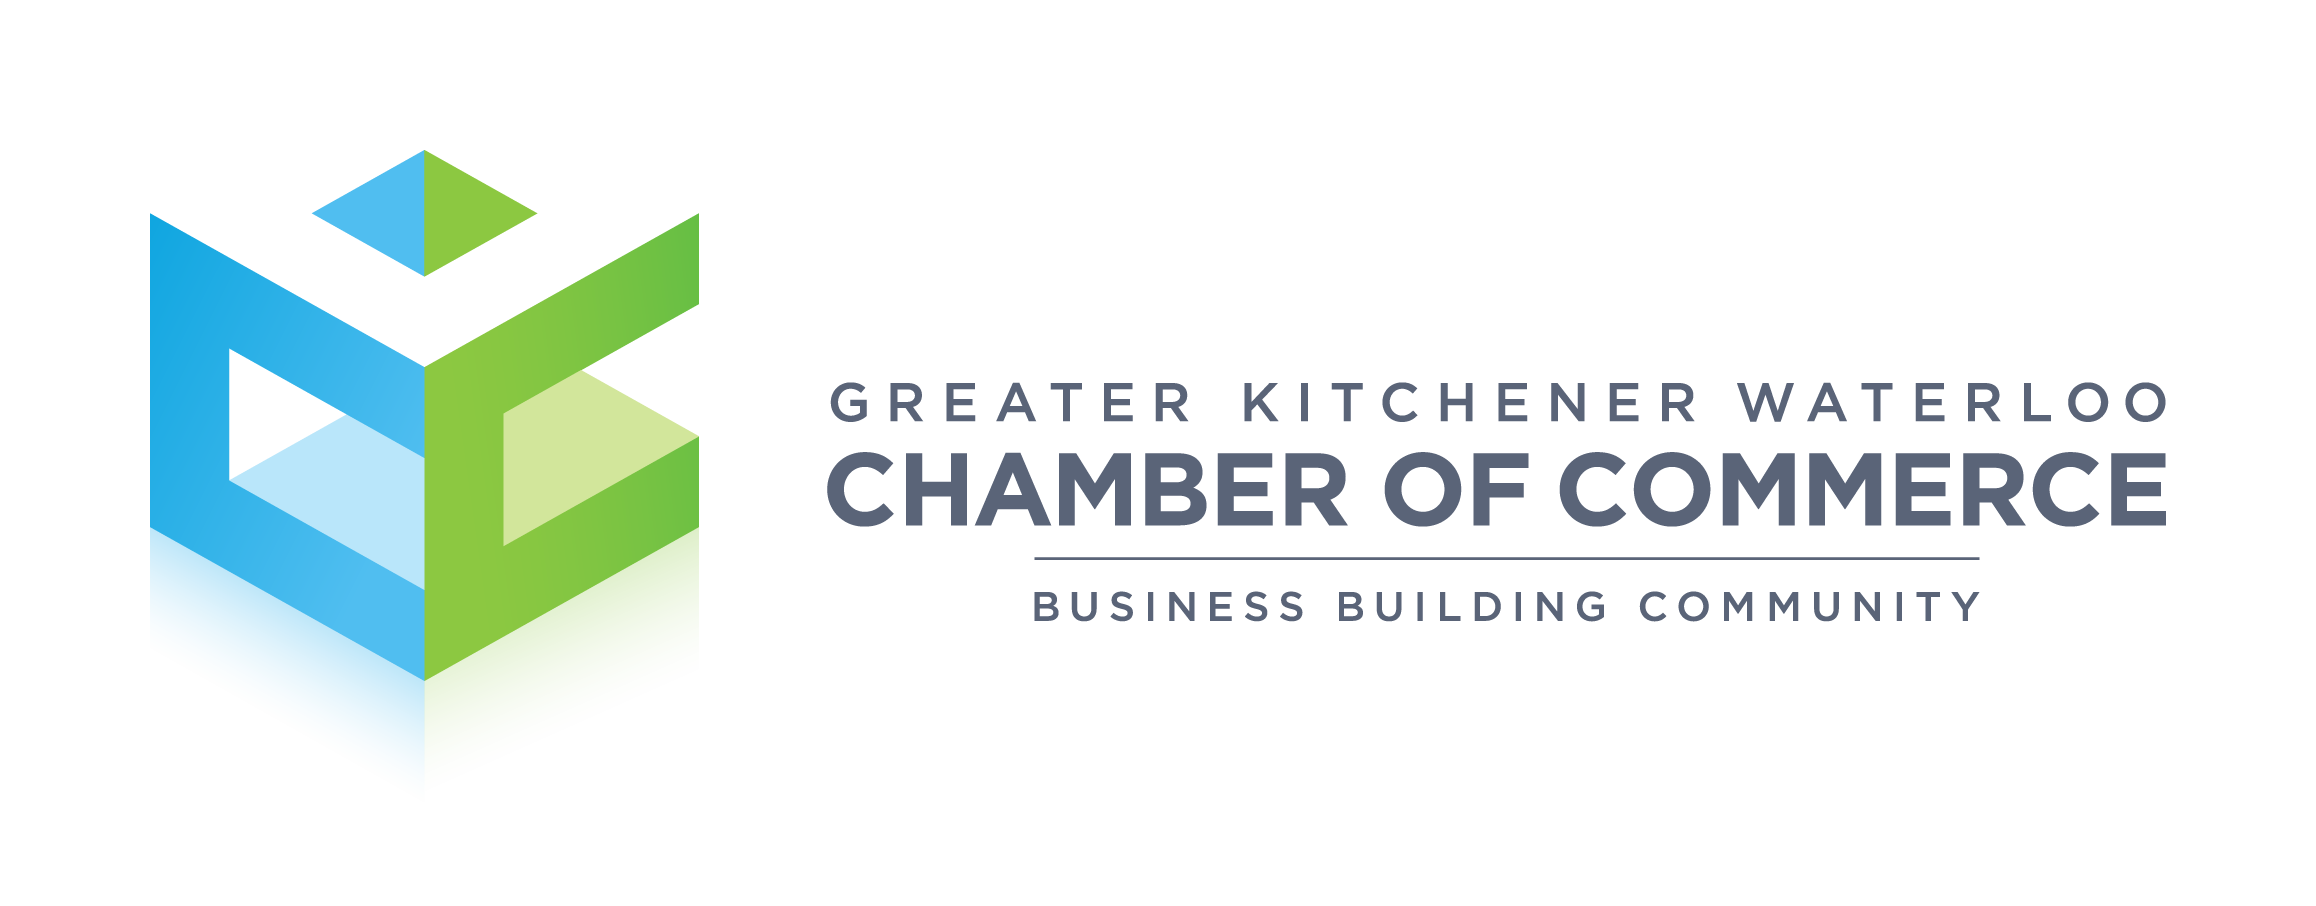 Greater Kitchener Waterloo Chamber of Commerce Logo